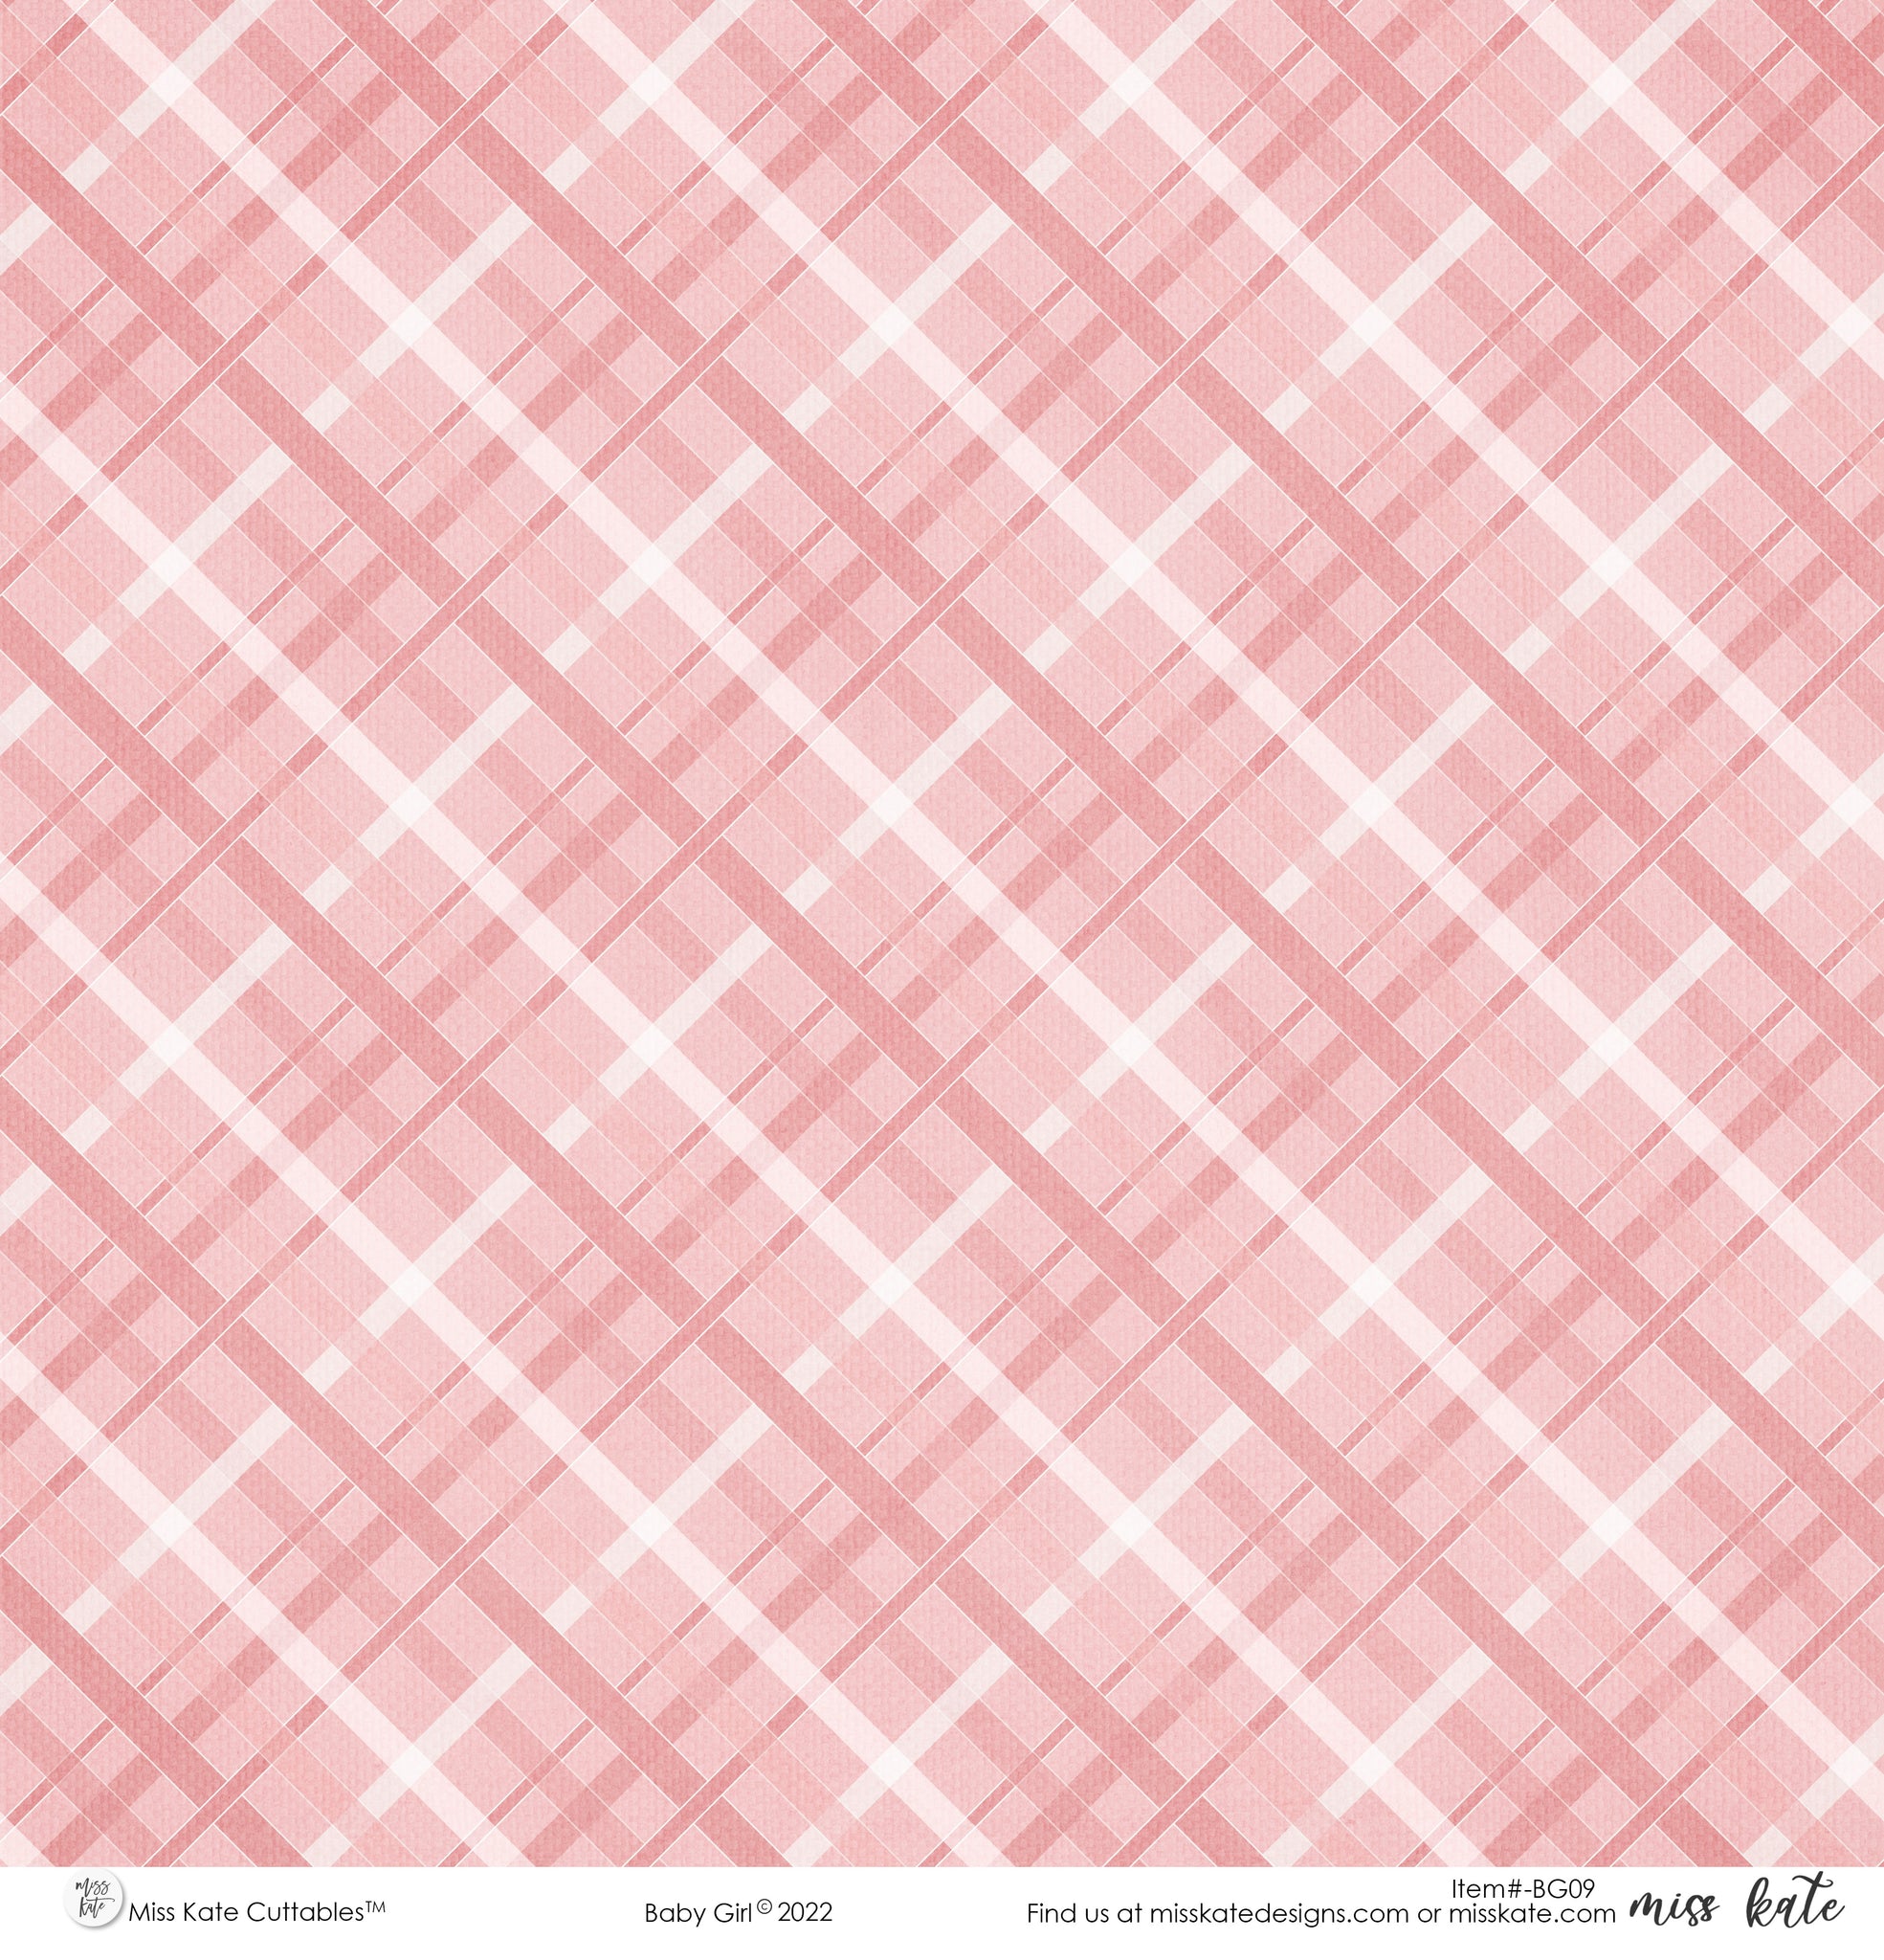 Light Pink Digital Paper, pattern Scrapbook Pack, printable mixed